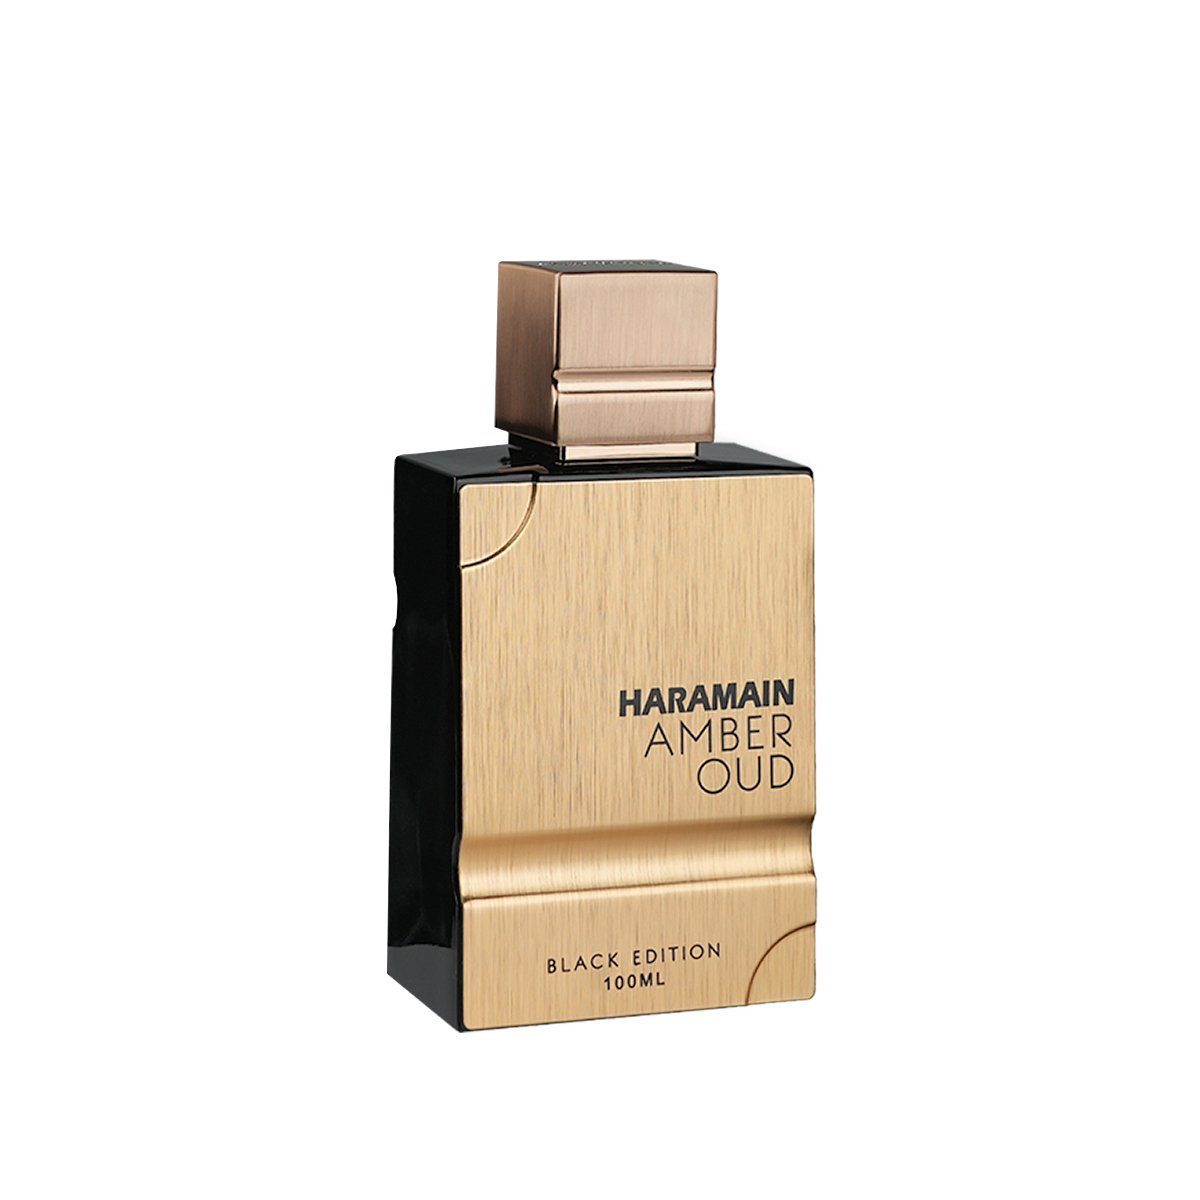 Edition Eau de al Amber Black Parfum haramain Oud